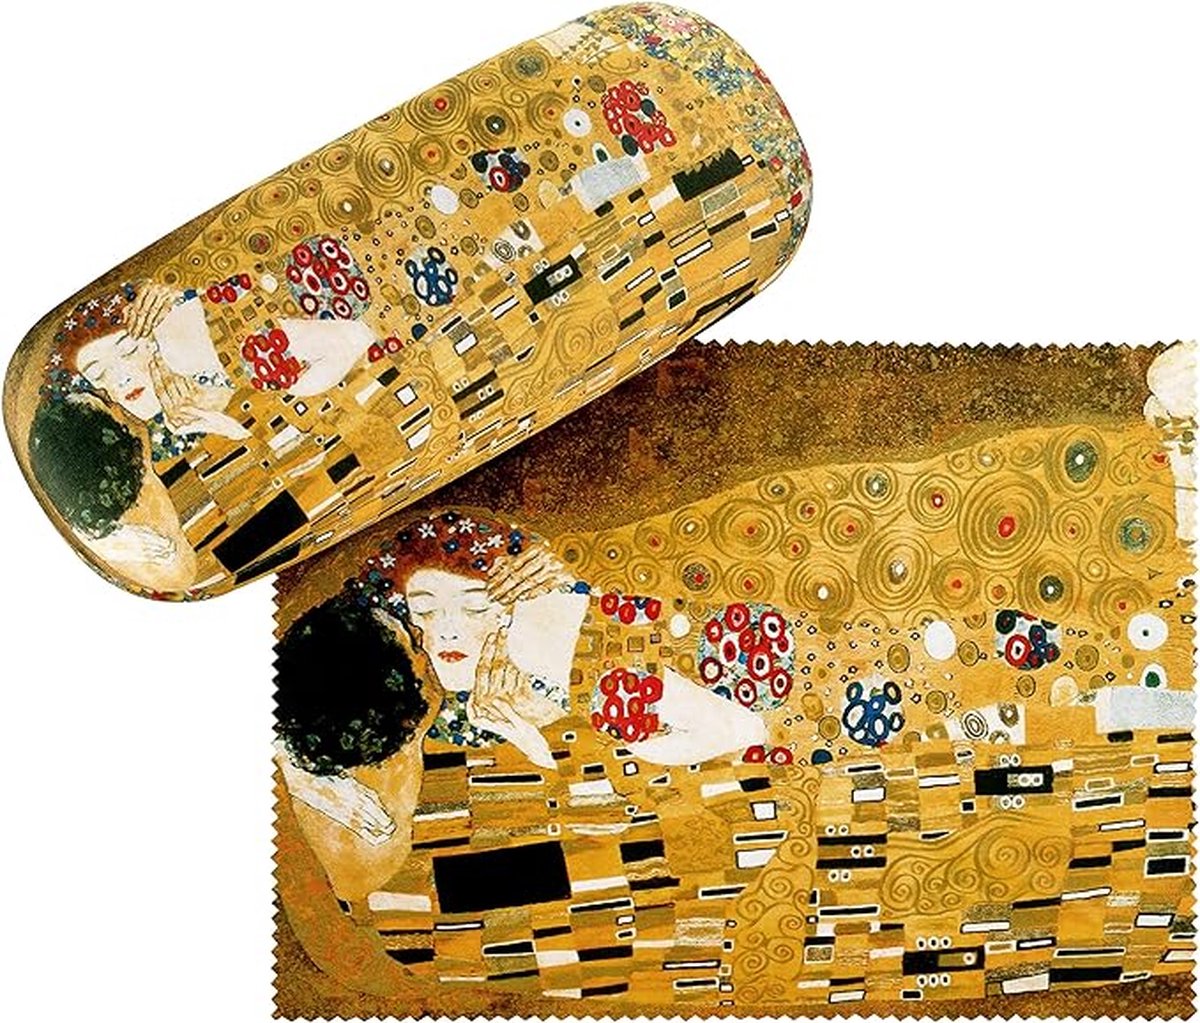 Brillenkoker Gustav Klimt De Kus Liefde Kunst Motief Etui Bril Microfiber Bril Reinigingsdoek Brillendoos Stabiele Hard Case Set met stof bekleed, Meerkleurig